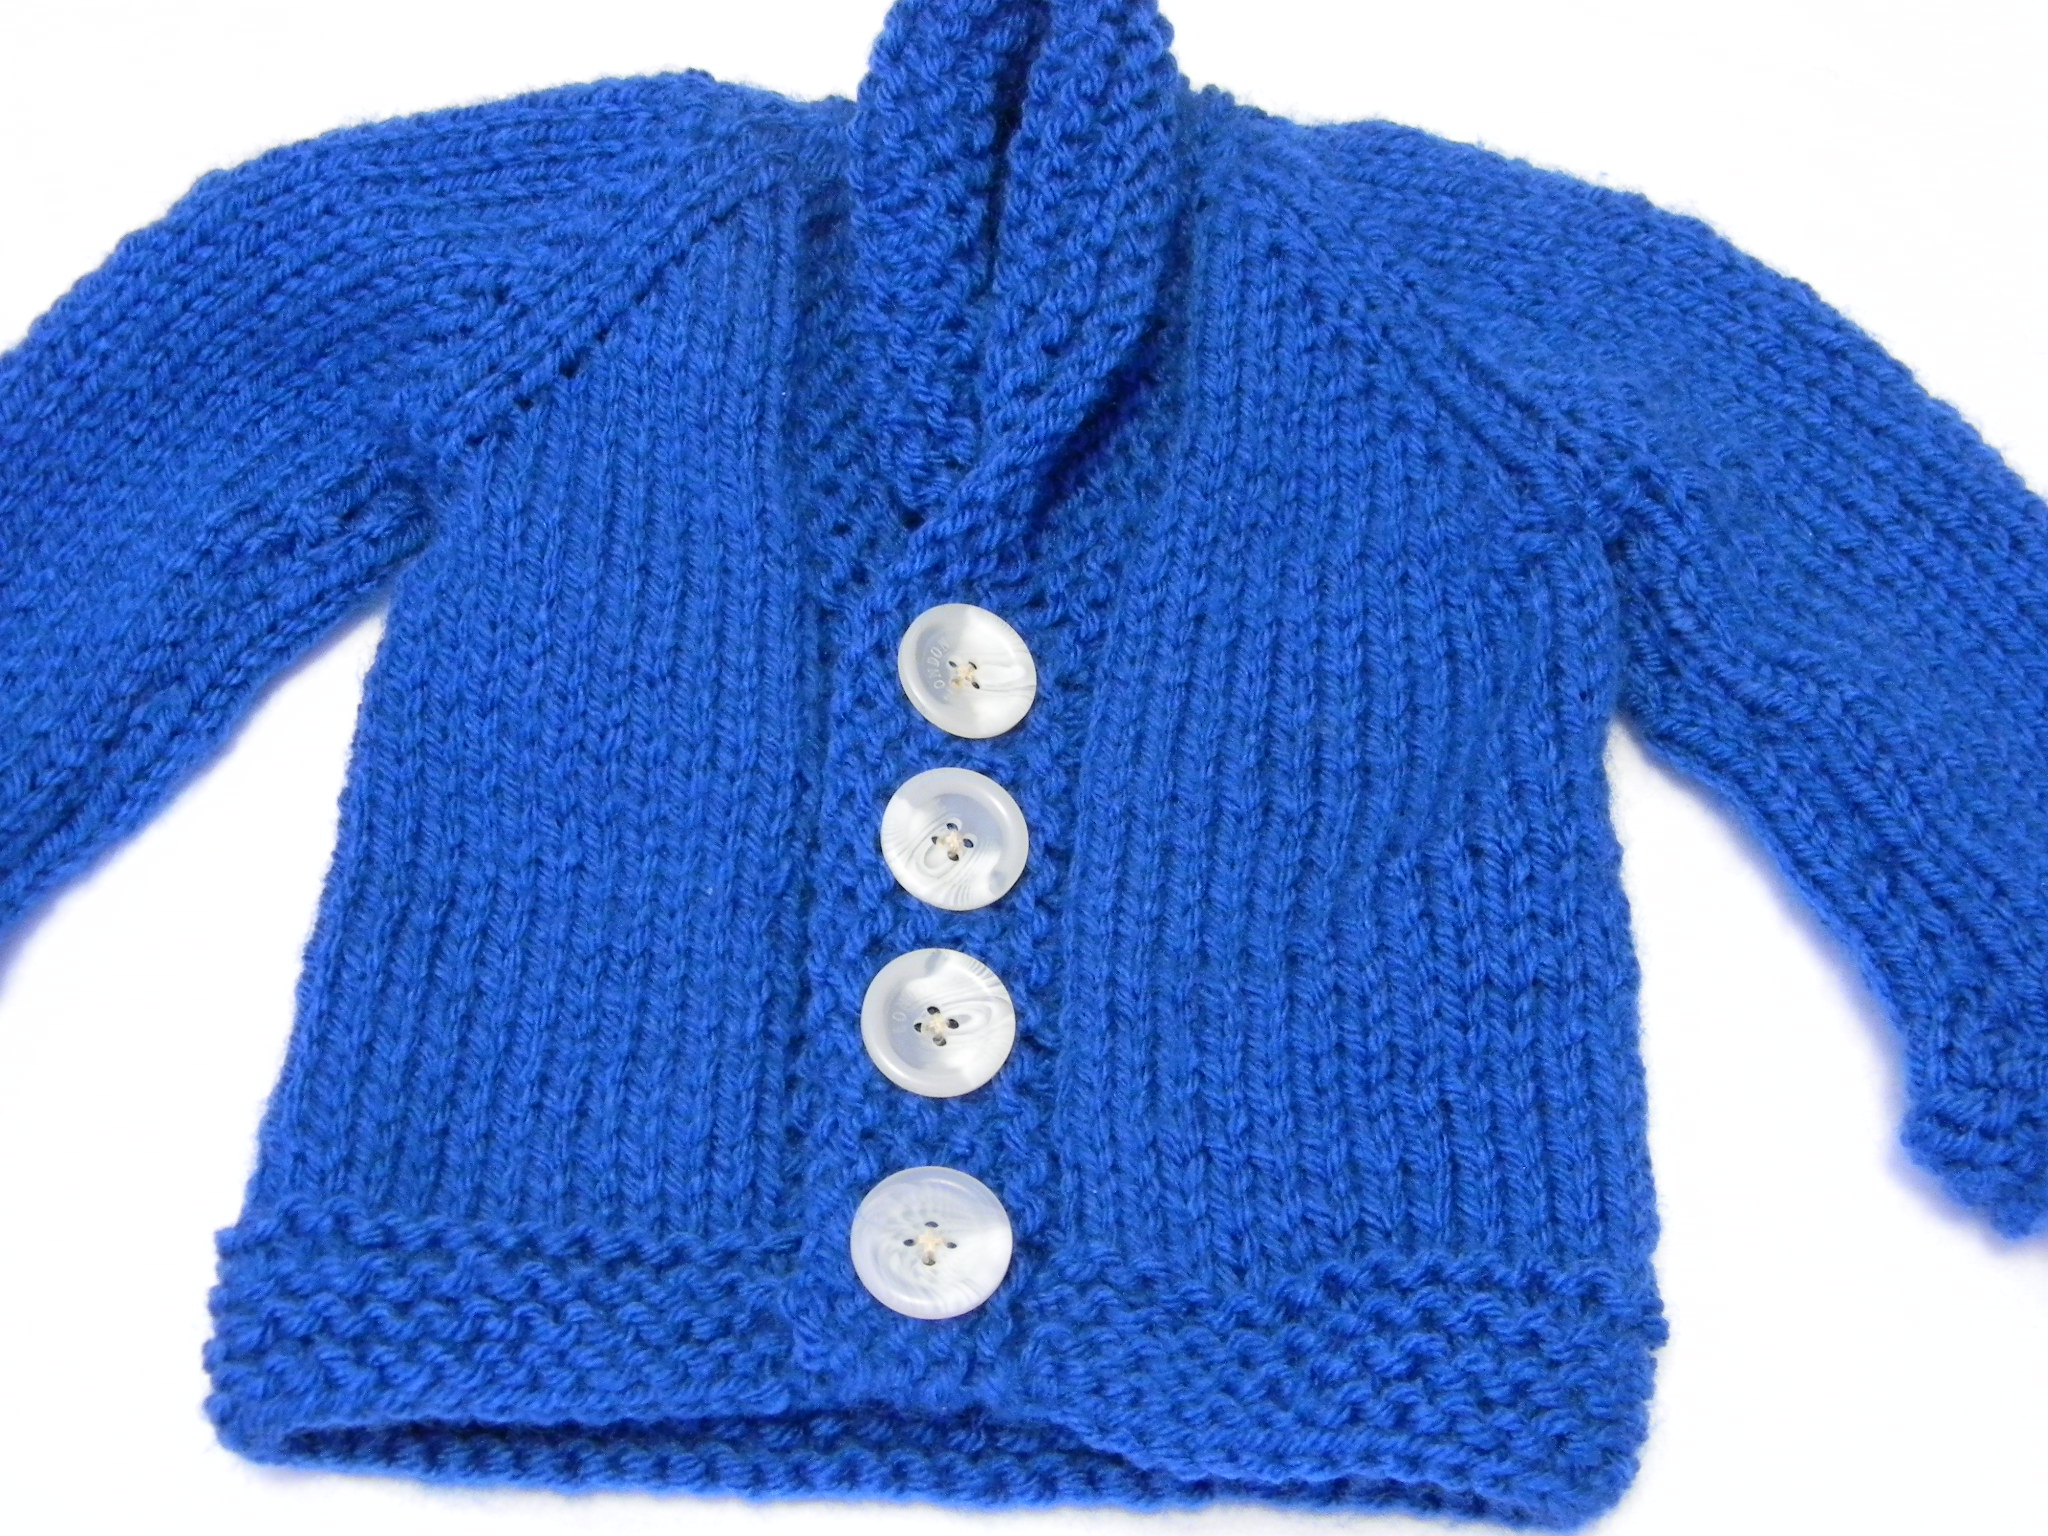 Baby jacket crochet pattern. - Crafts - Free Craft Patterns